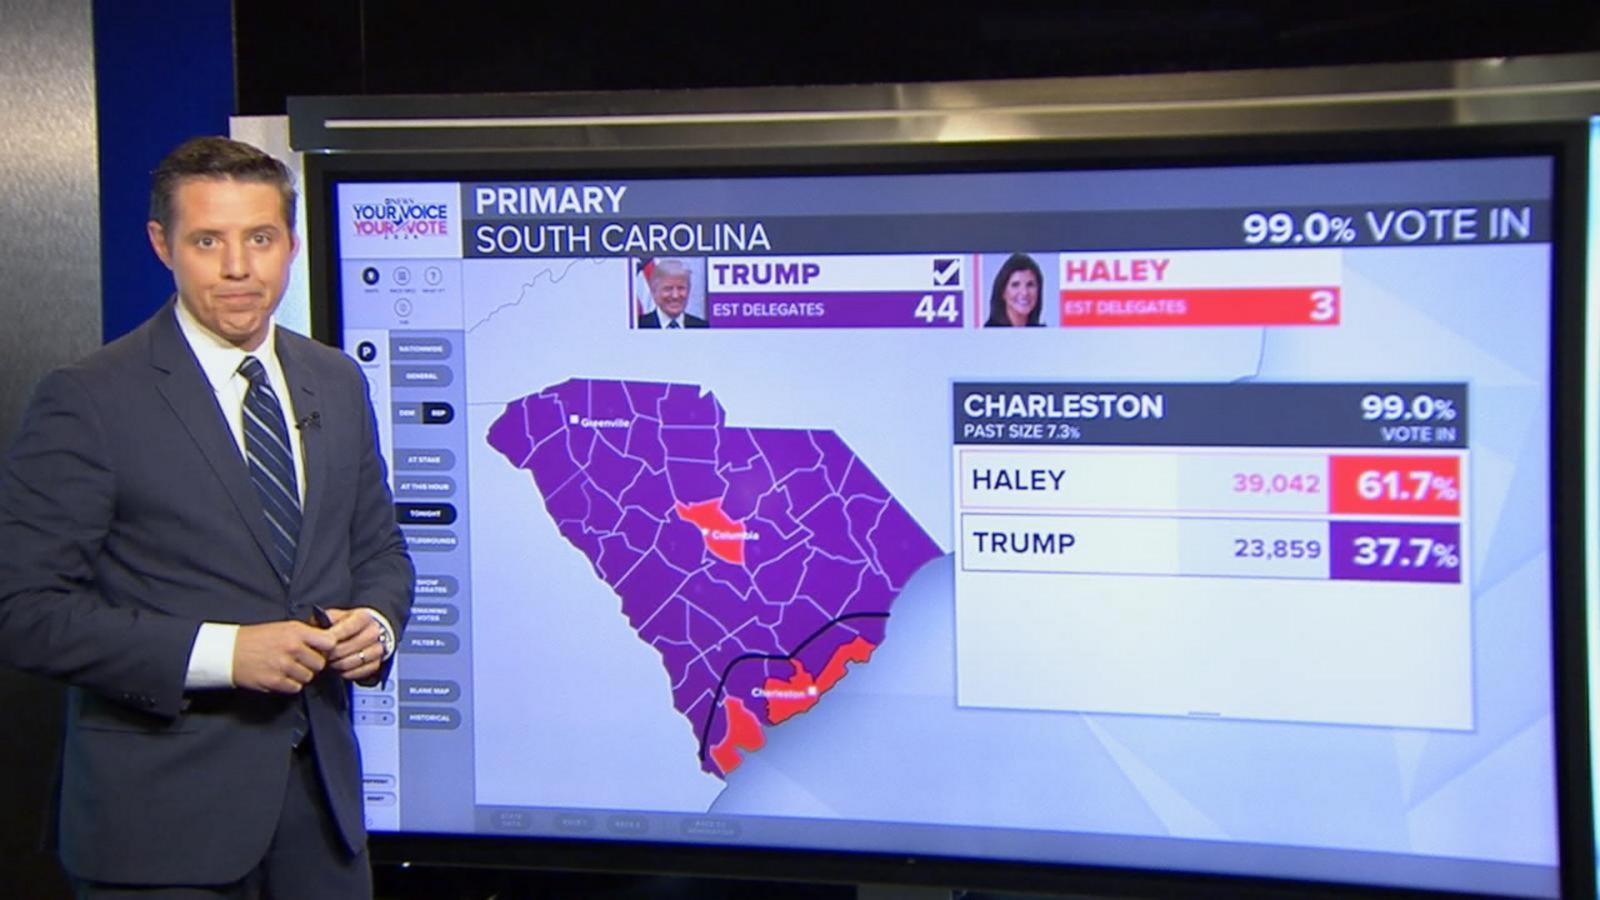 VIDEO: South Carolina primary results